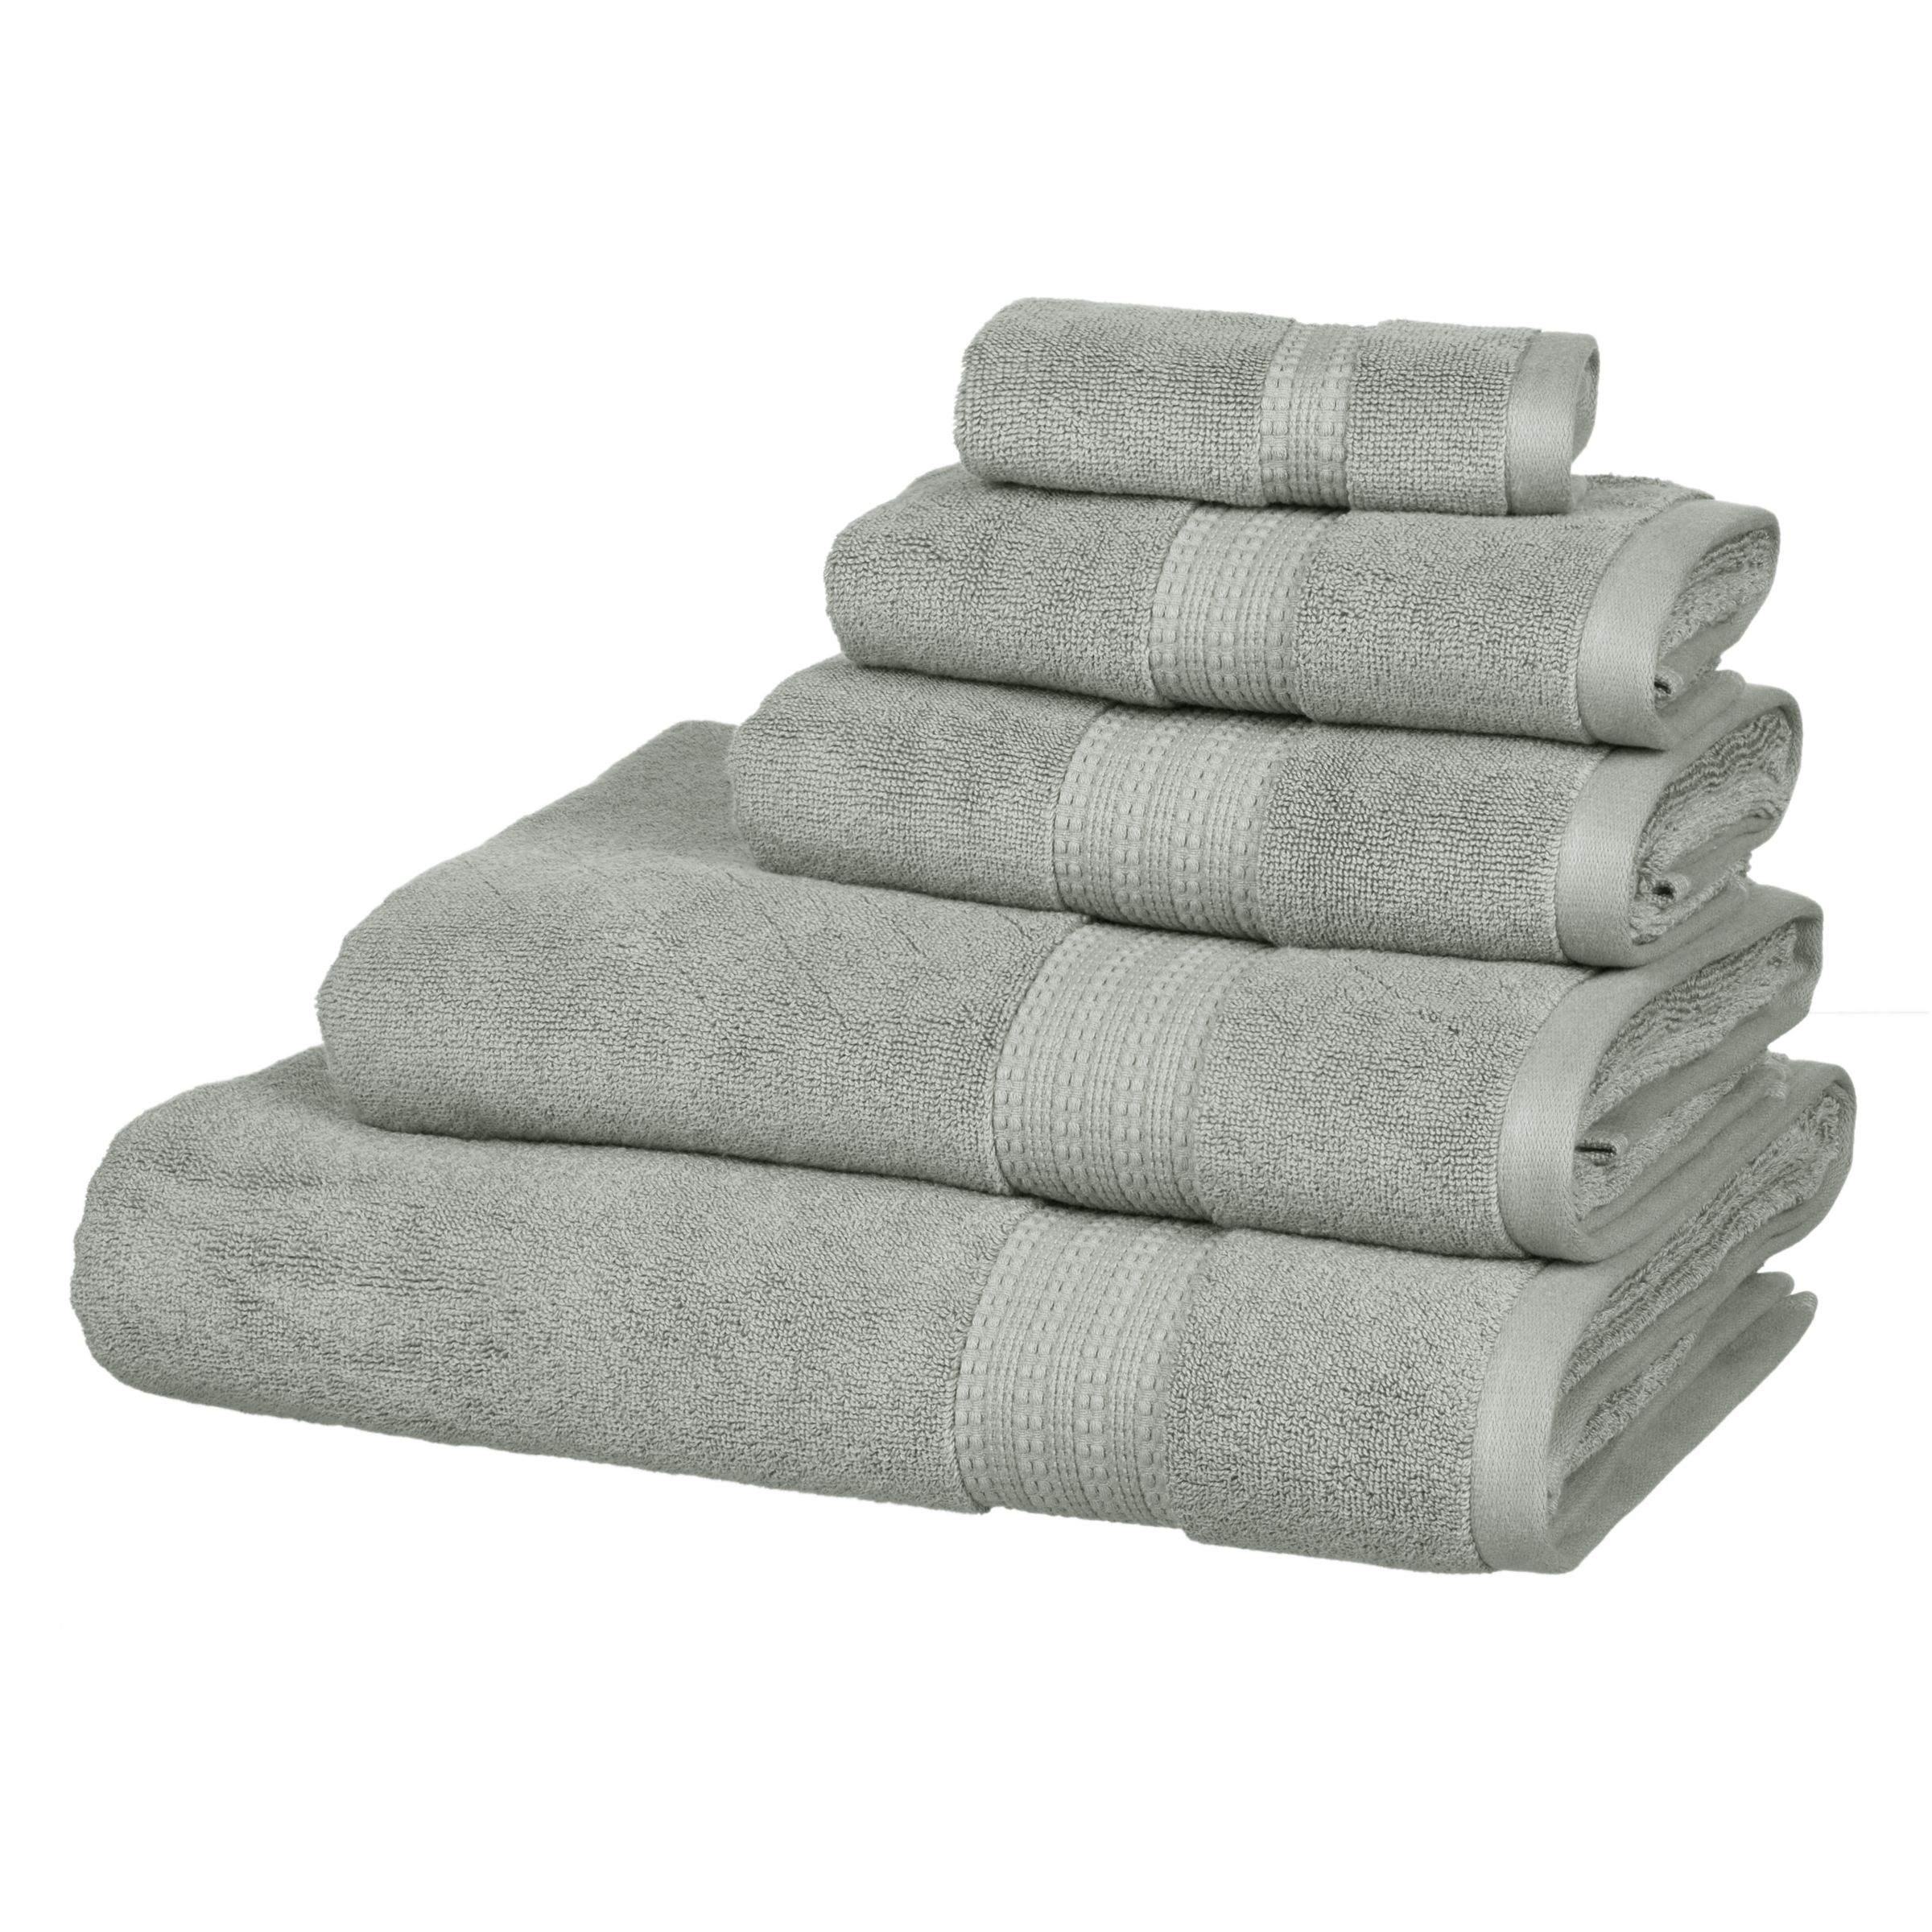 John Lewis & Partners Supima Cotton Towels